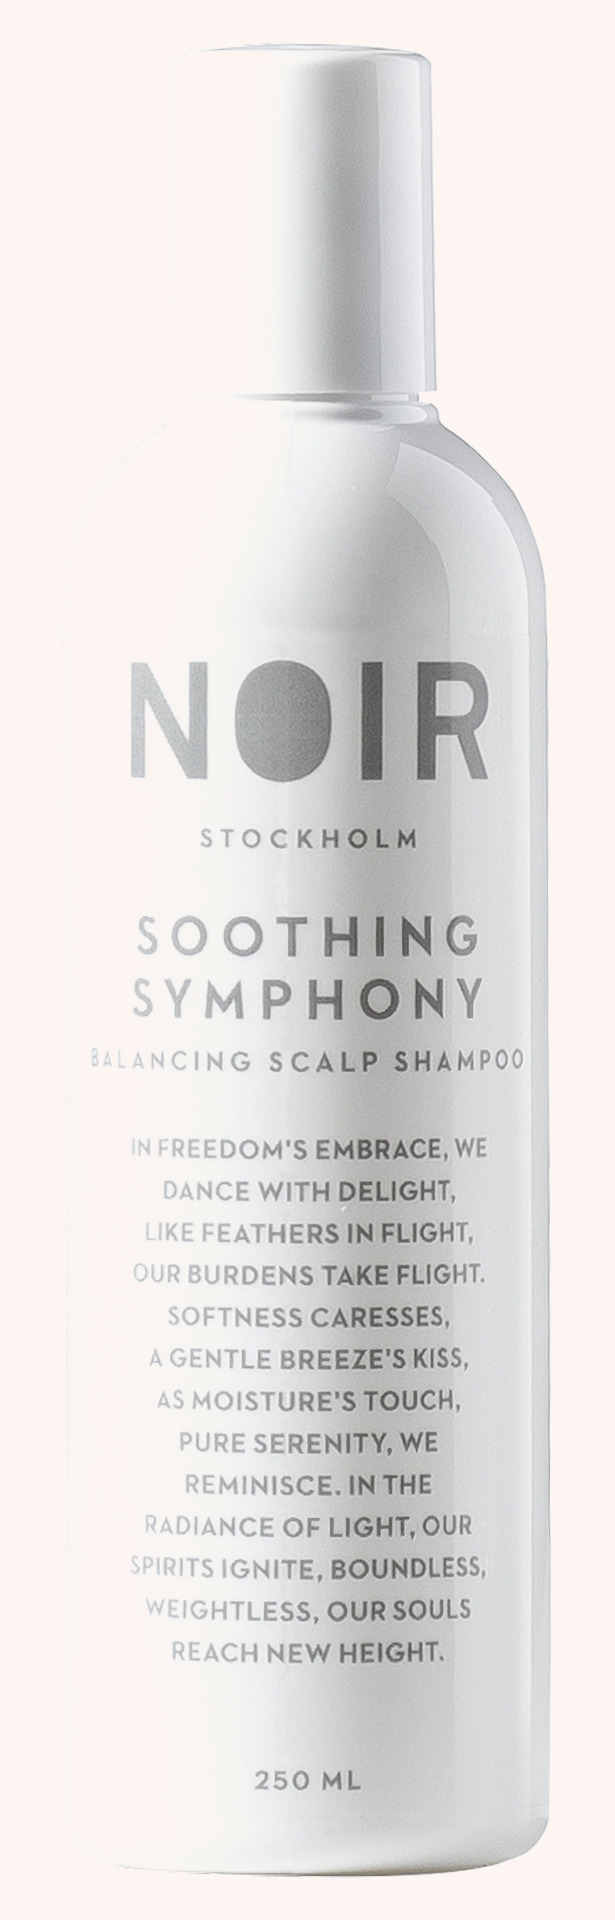 Soothing Symphony Balancing Scalp Shampoo 250 ml